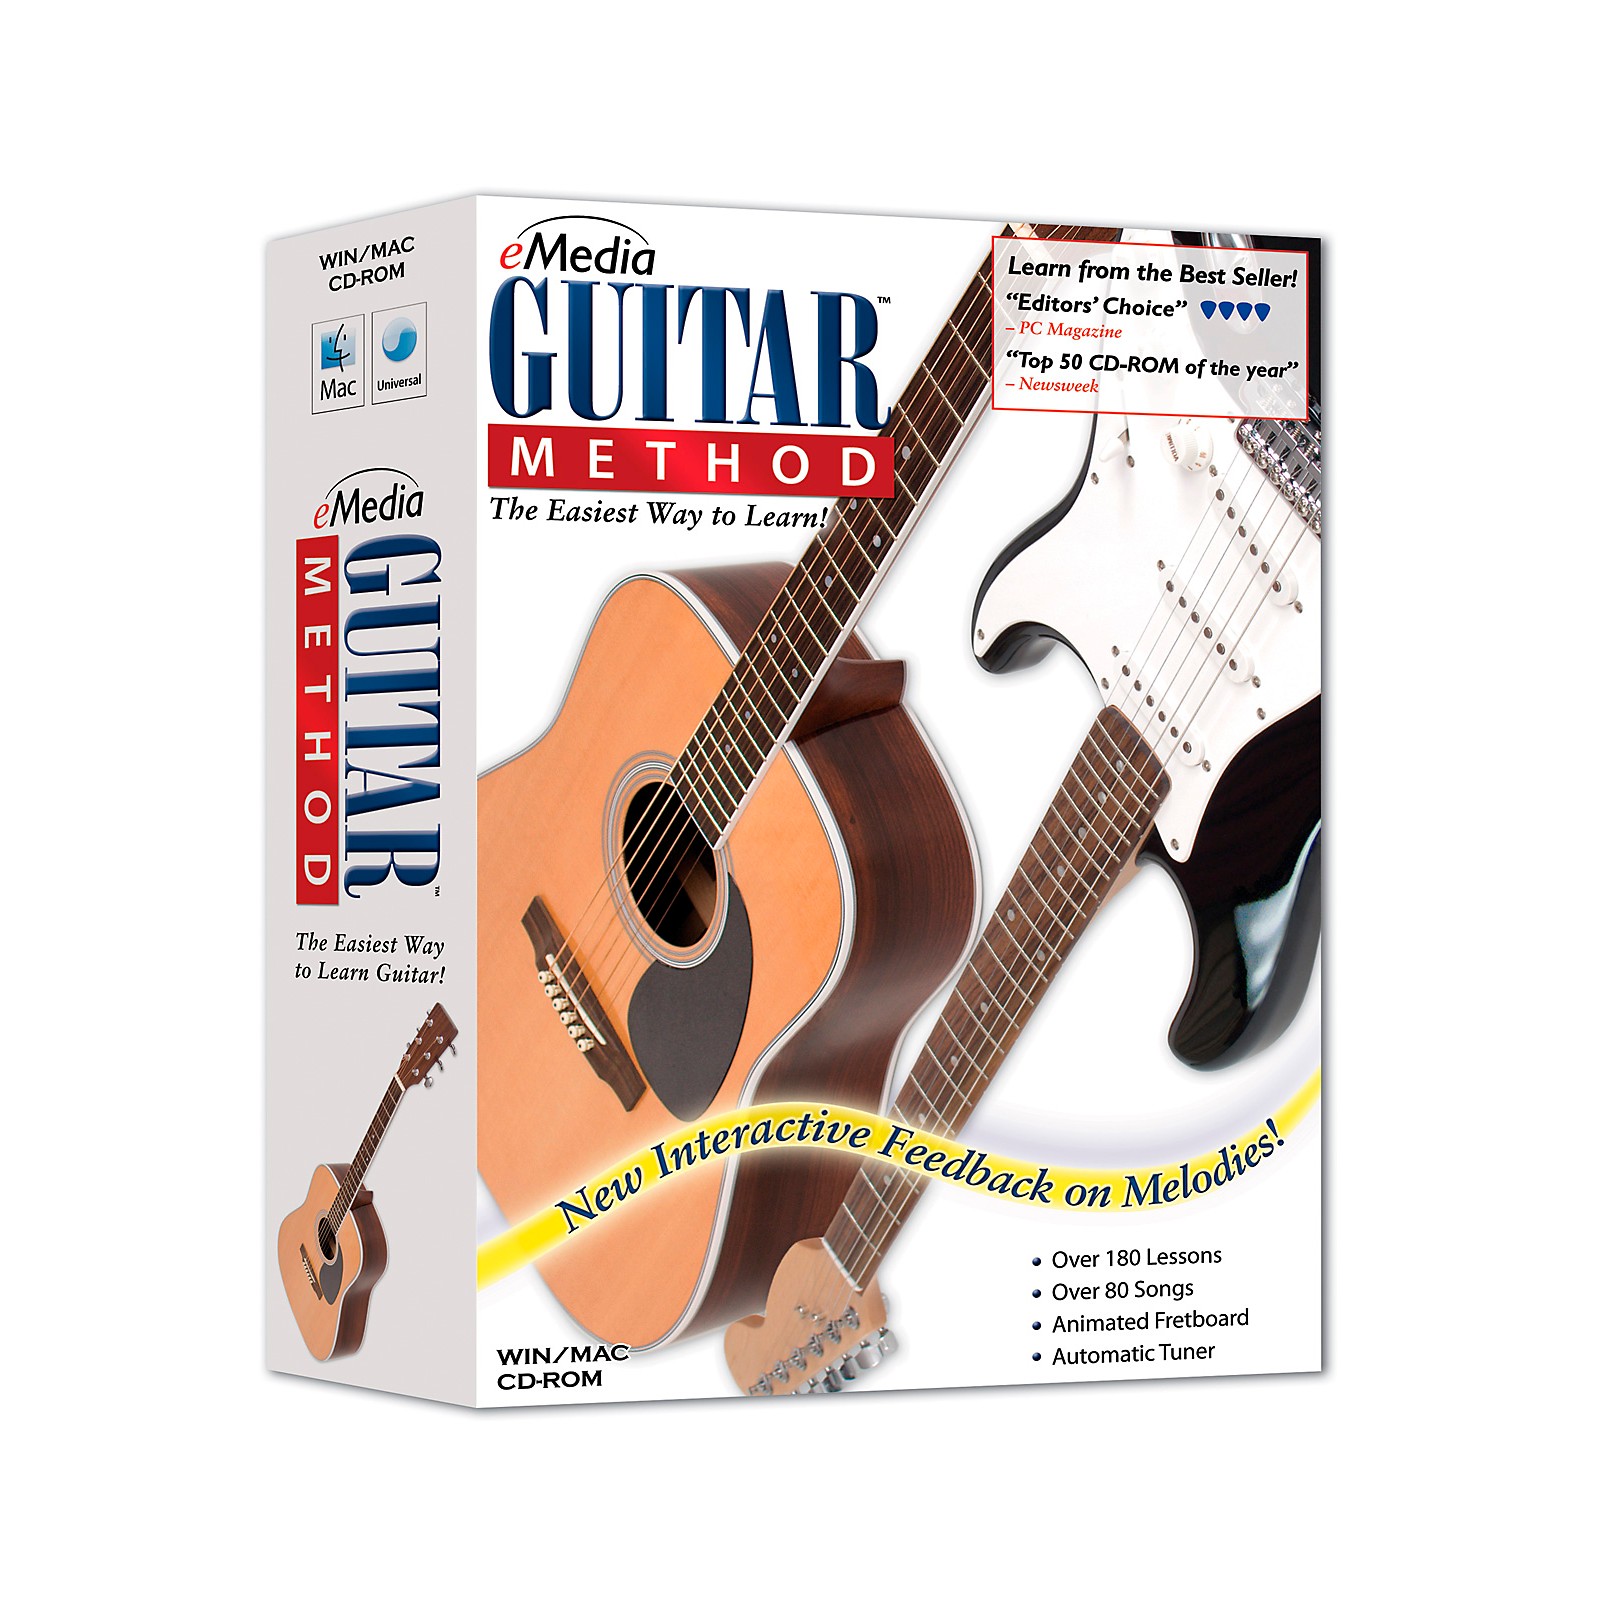 emedia guitar method 6